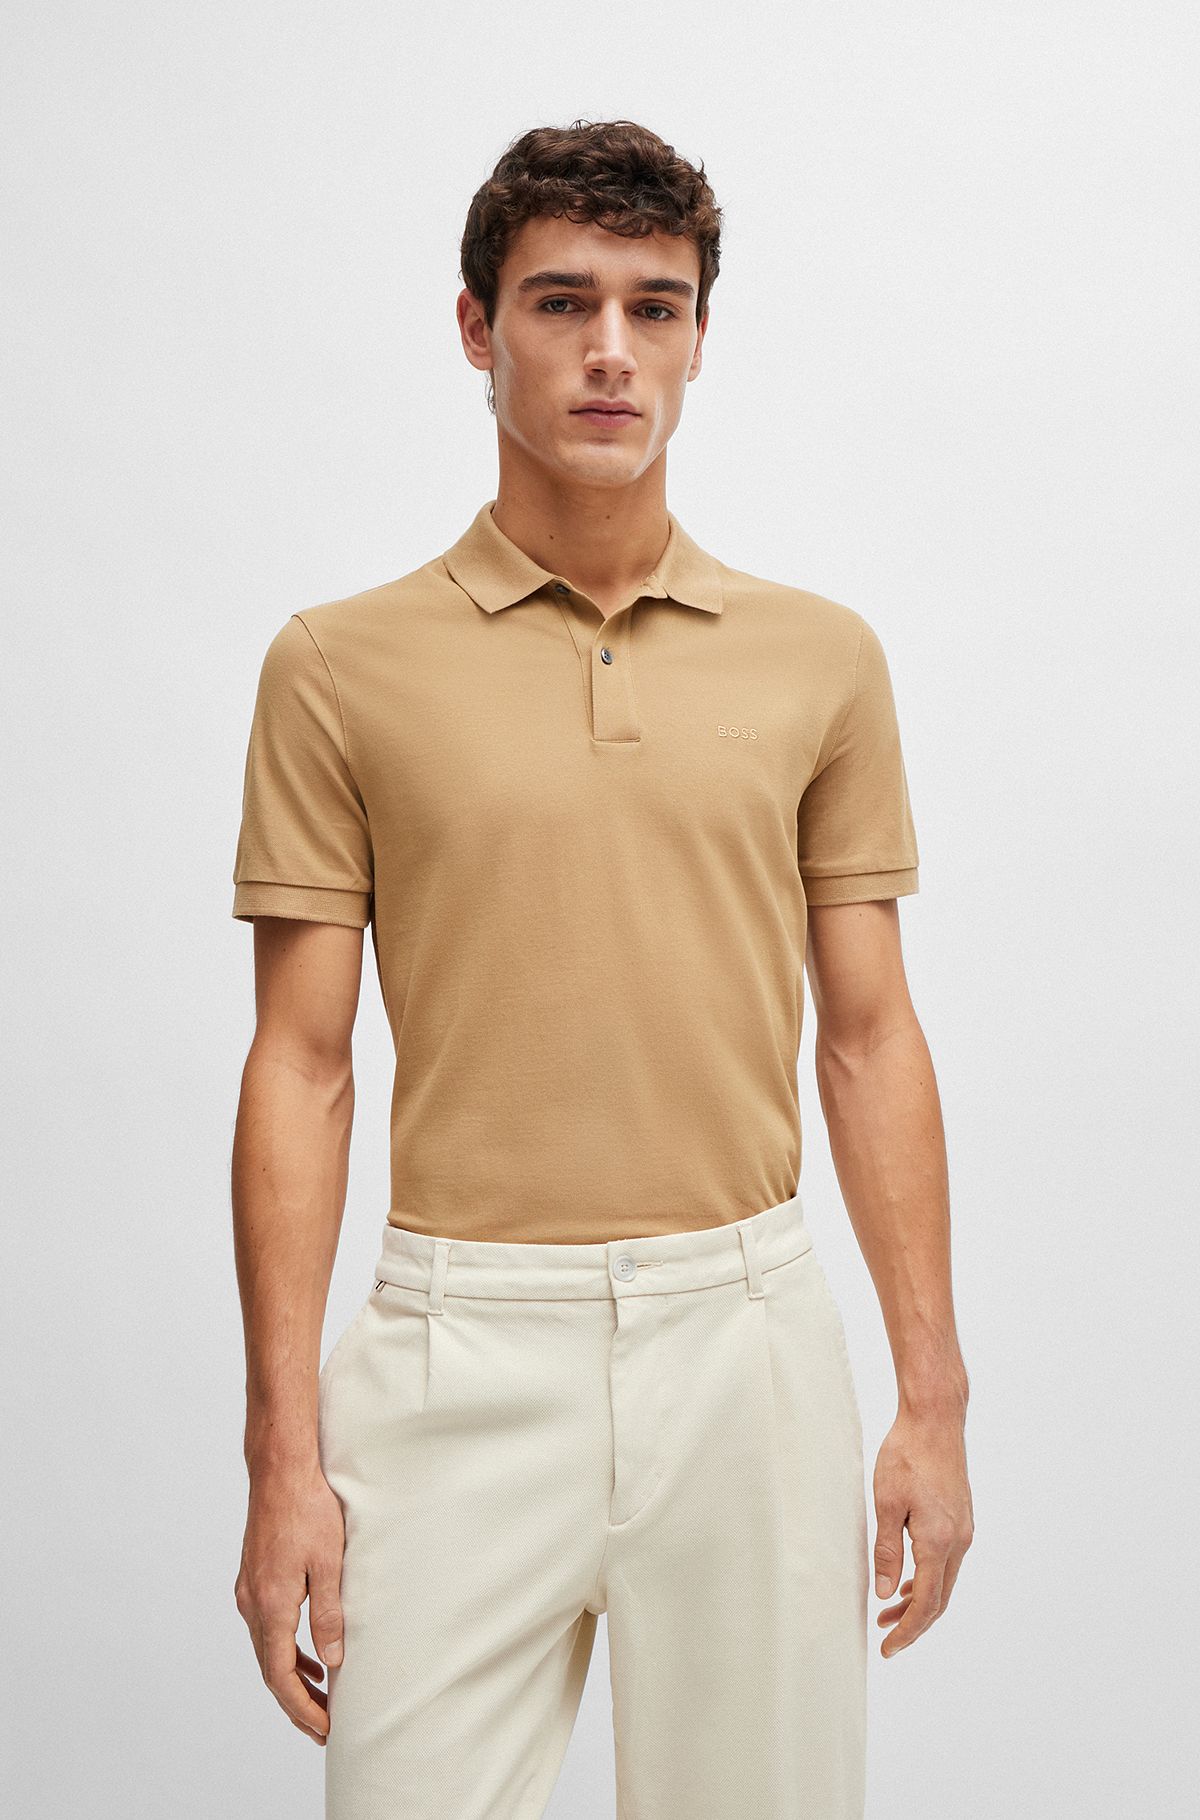 Beige Polo | Menswear Men Designer Shirts HUGO by BOSS for